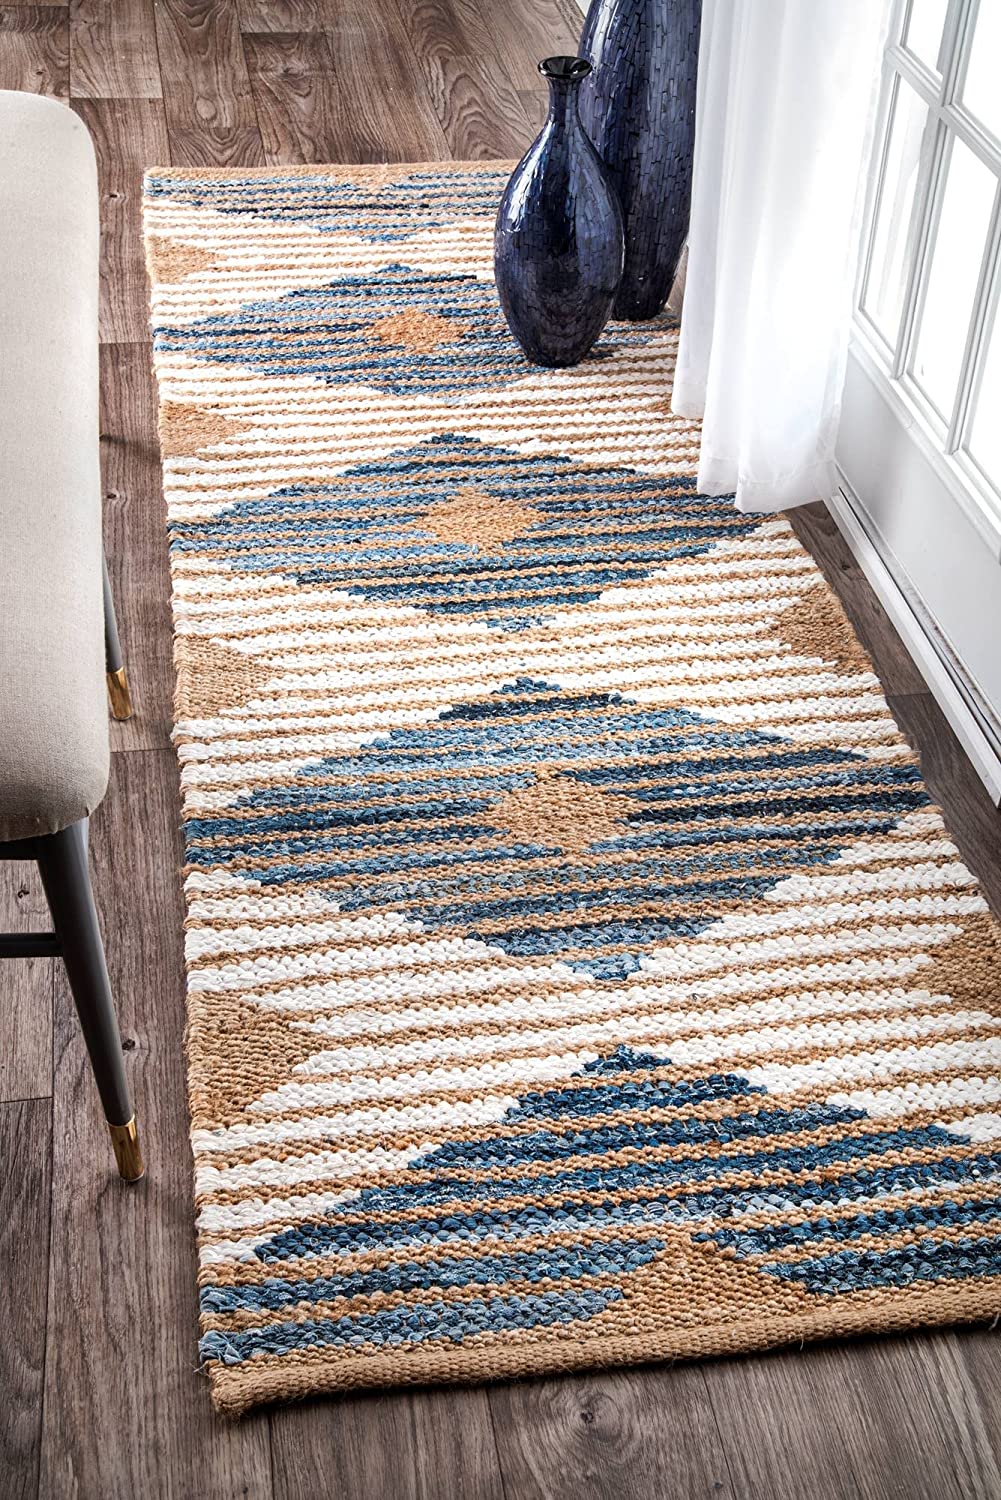 Responsibly Handcrafted Hand Braided Twined Jute And Denim Blue Rug | Jute  rug runner, Braided rag rugs, Rugs on carpet